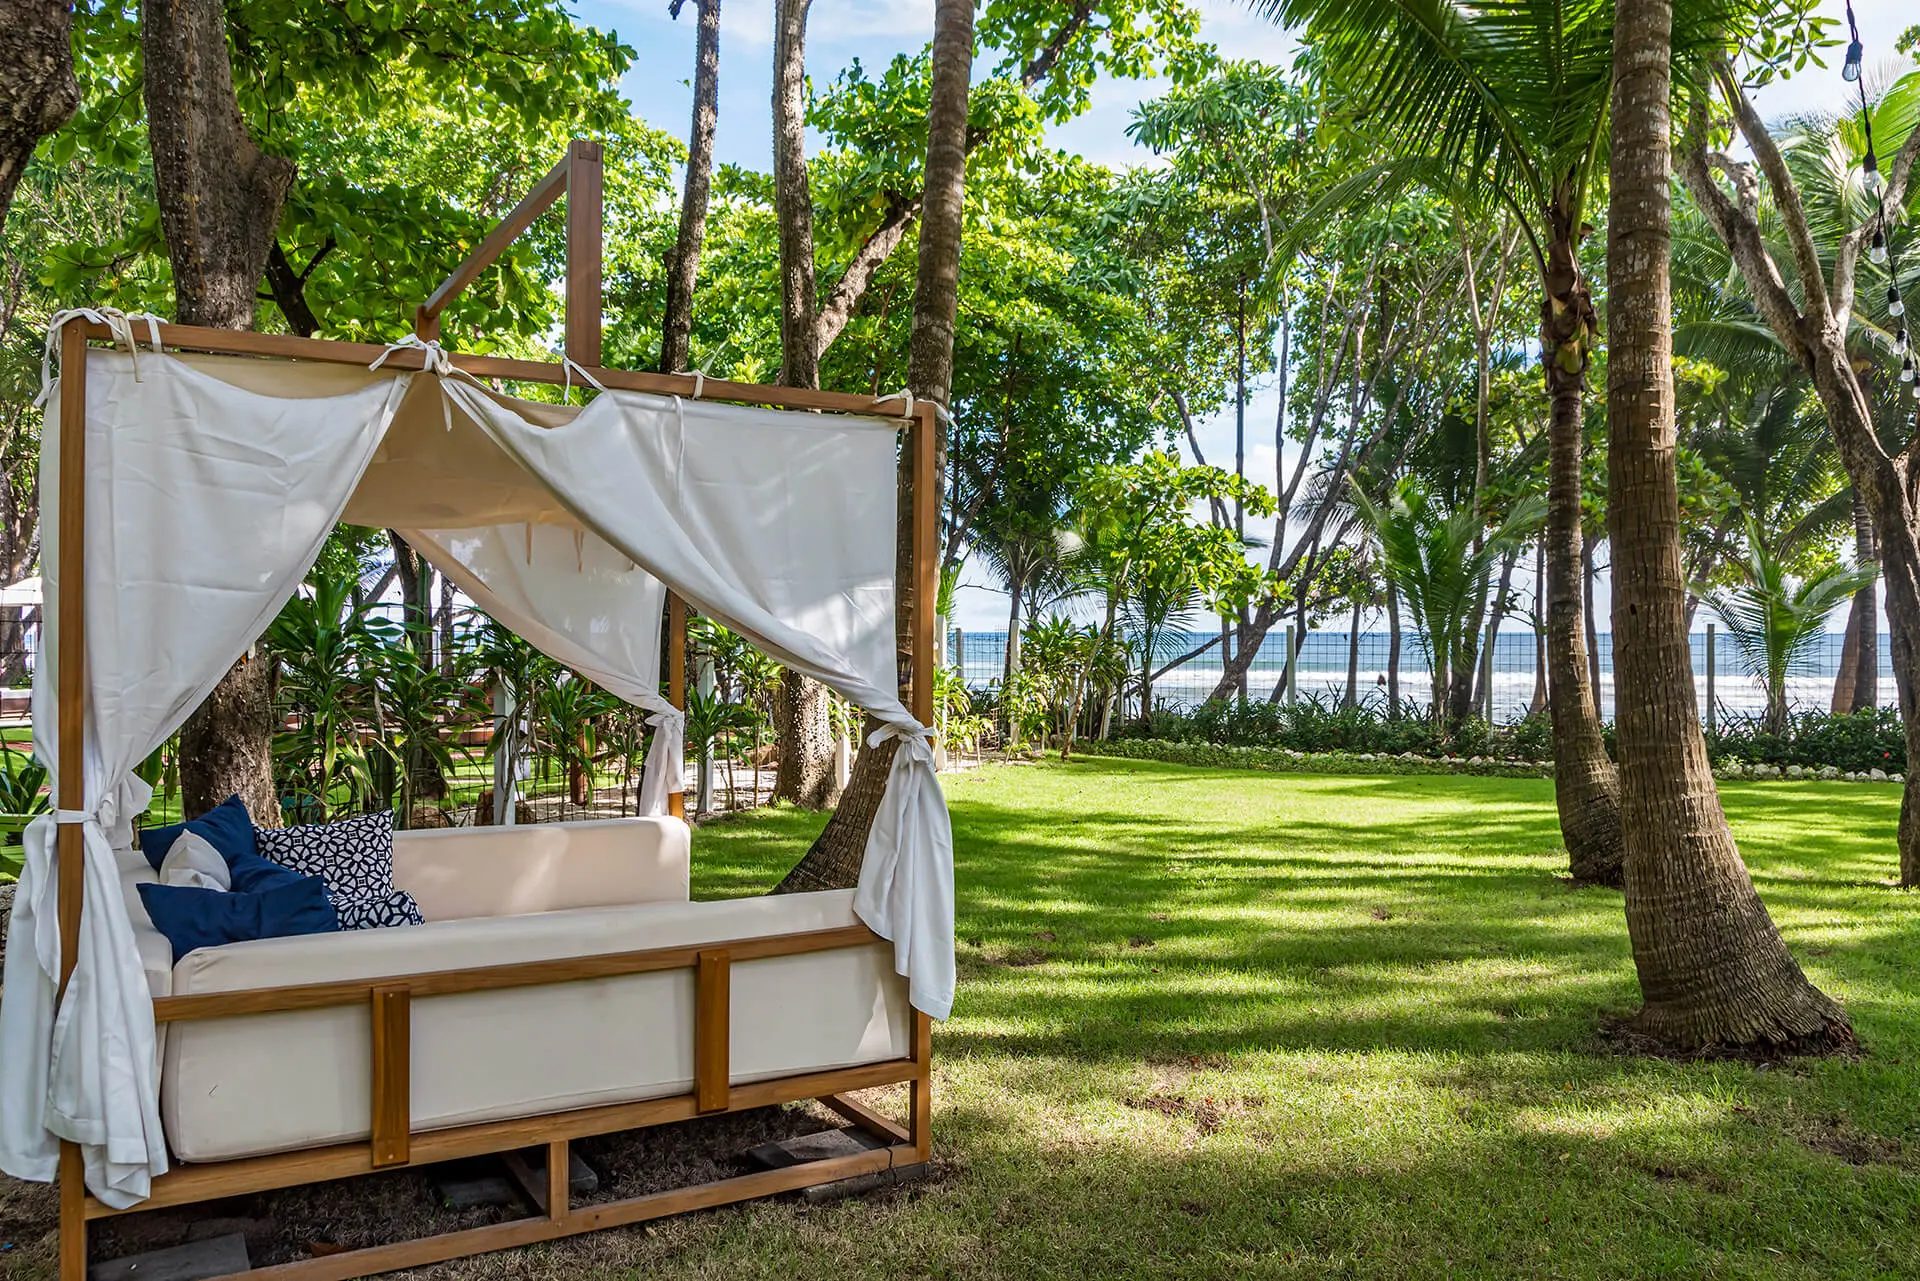 Luxury villas with comfortable daybed facing the beach in Santa Teresa, Costa Rica